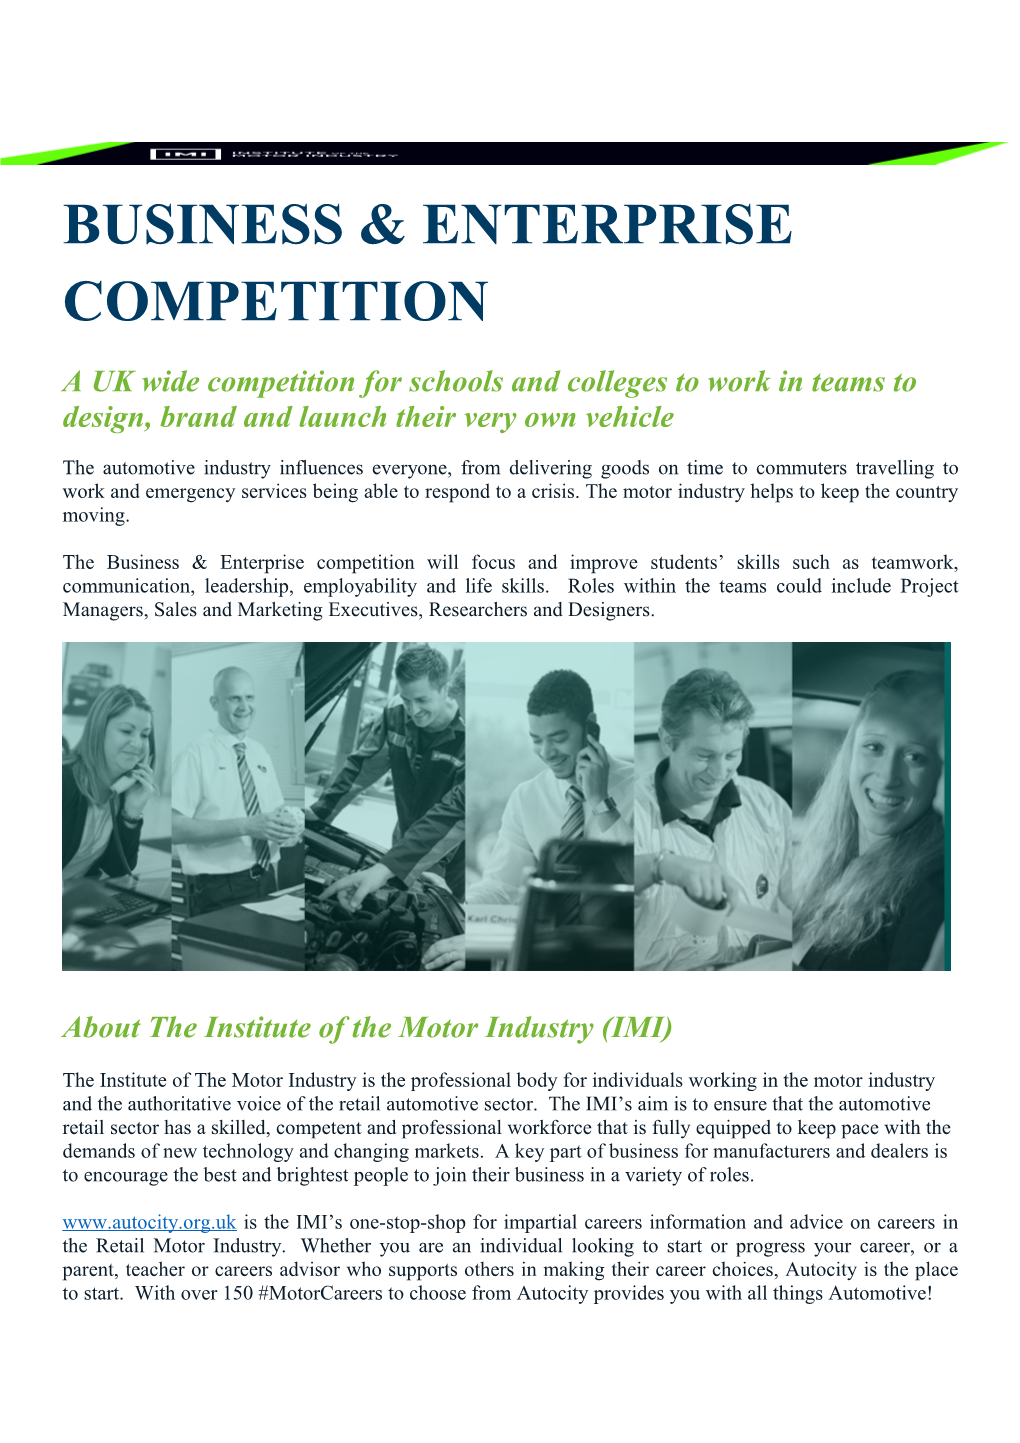 Business & Enterprise Competition